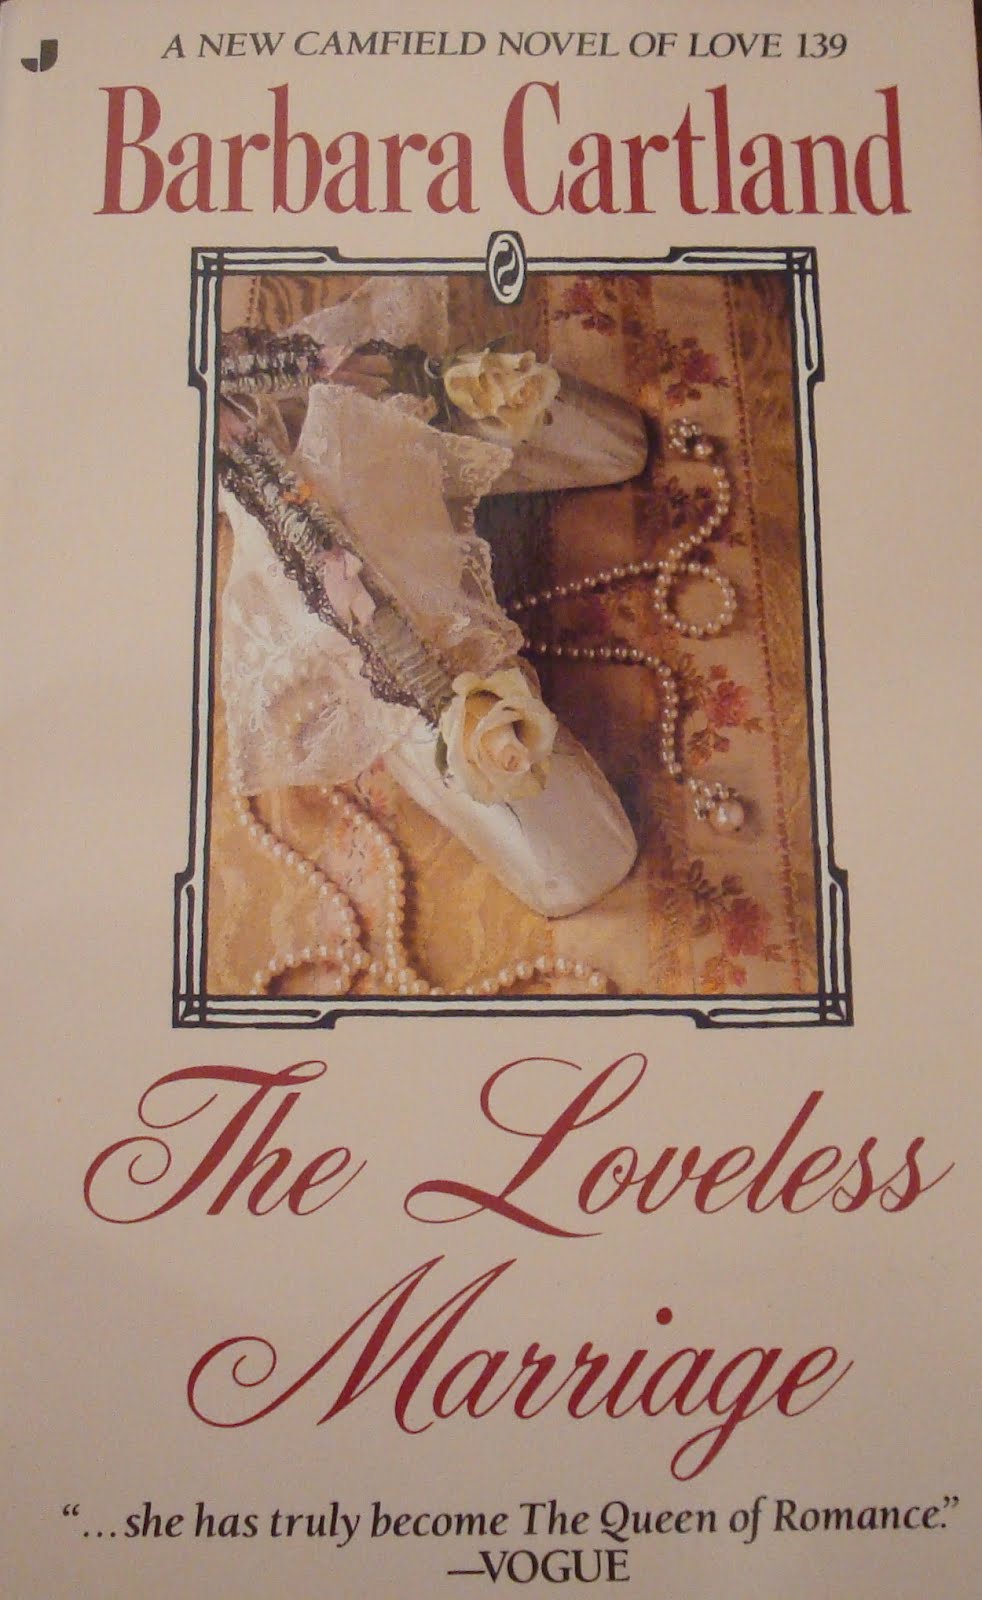 Barbara Cartland Books and Cover Art The Loveless Marriage